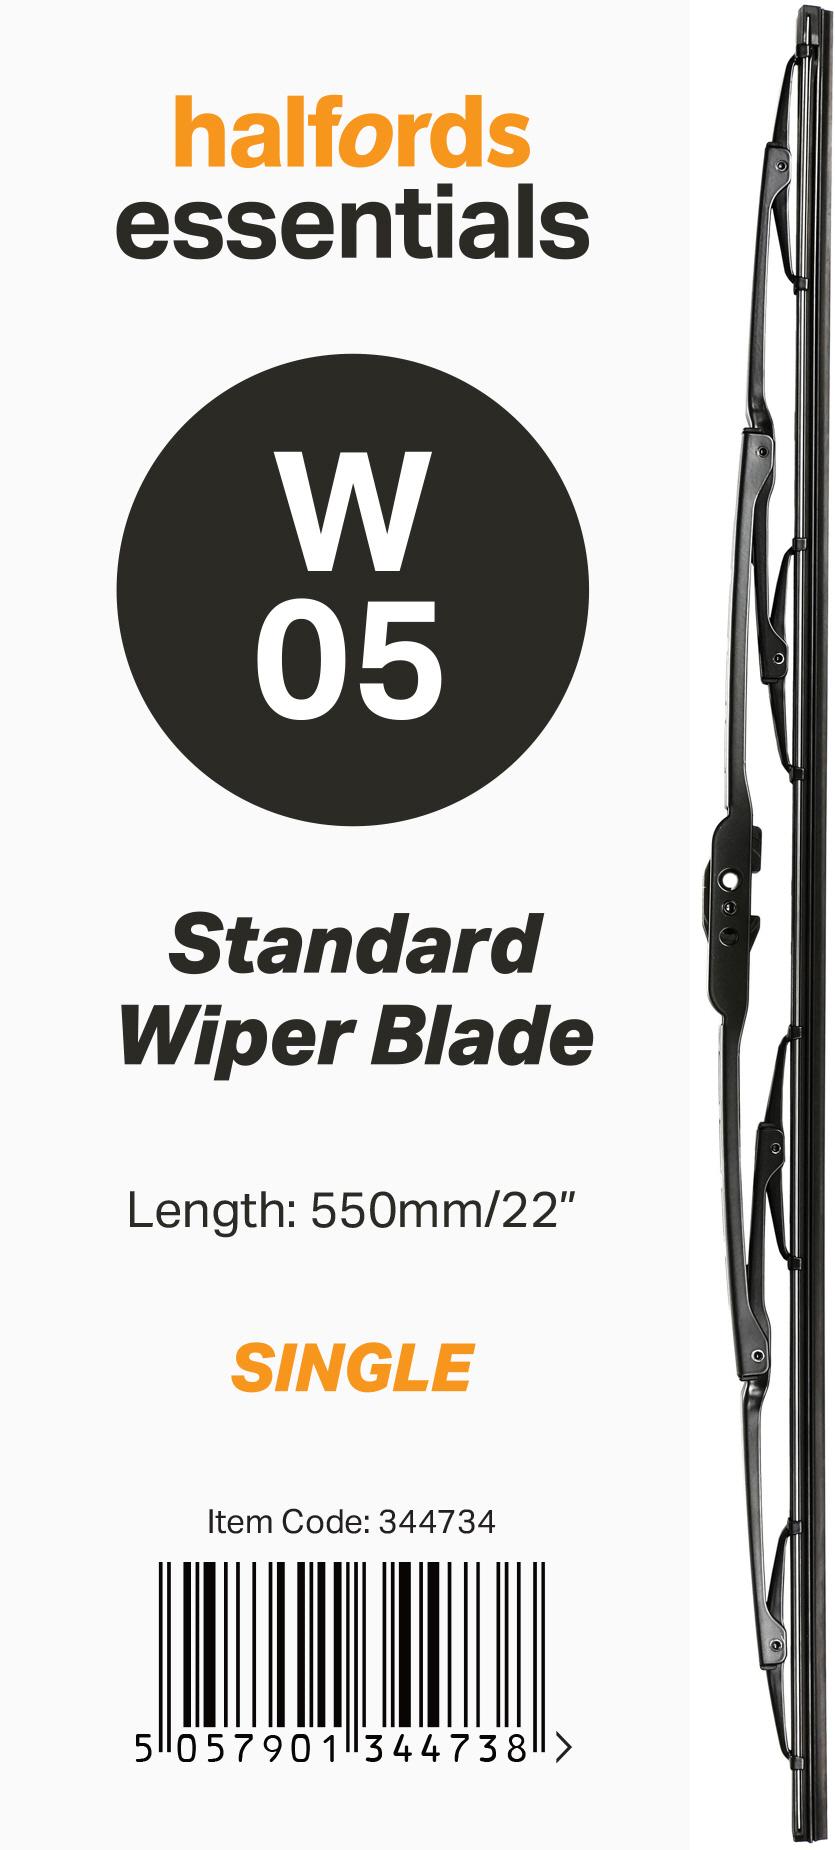 Halfords Essentials Single Wiper Blade W05 - 22 Inch